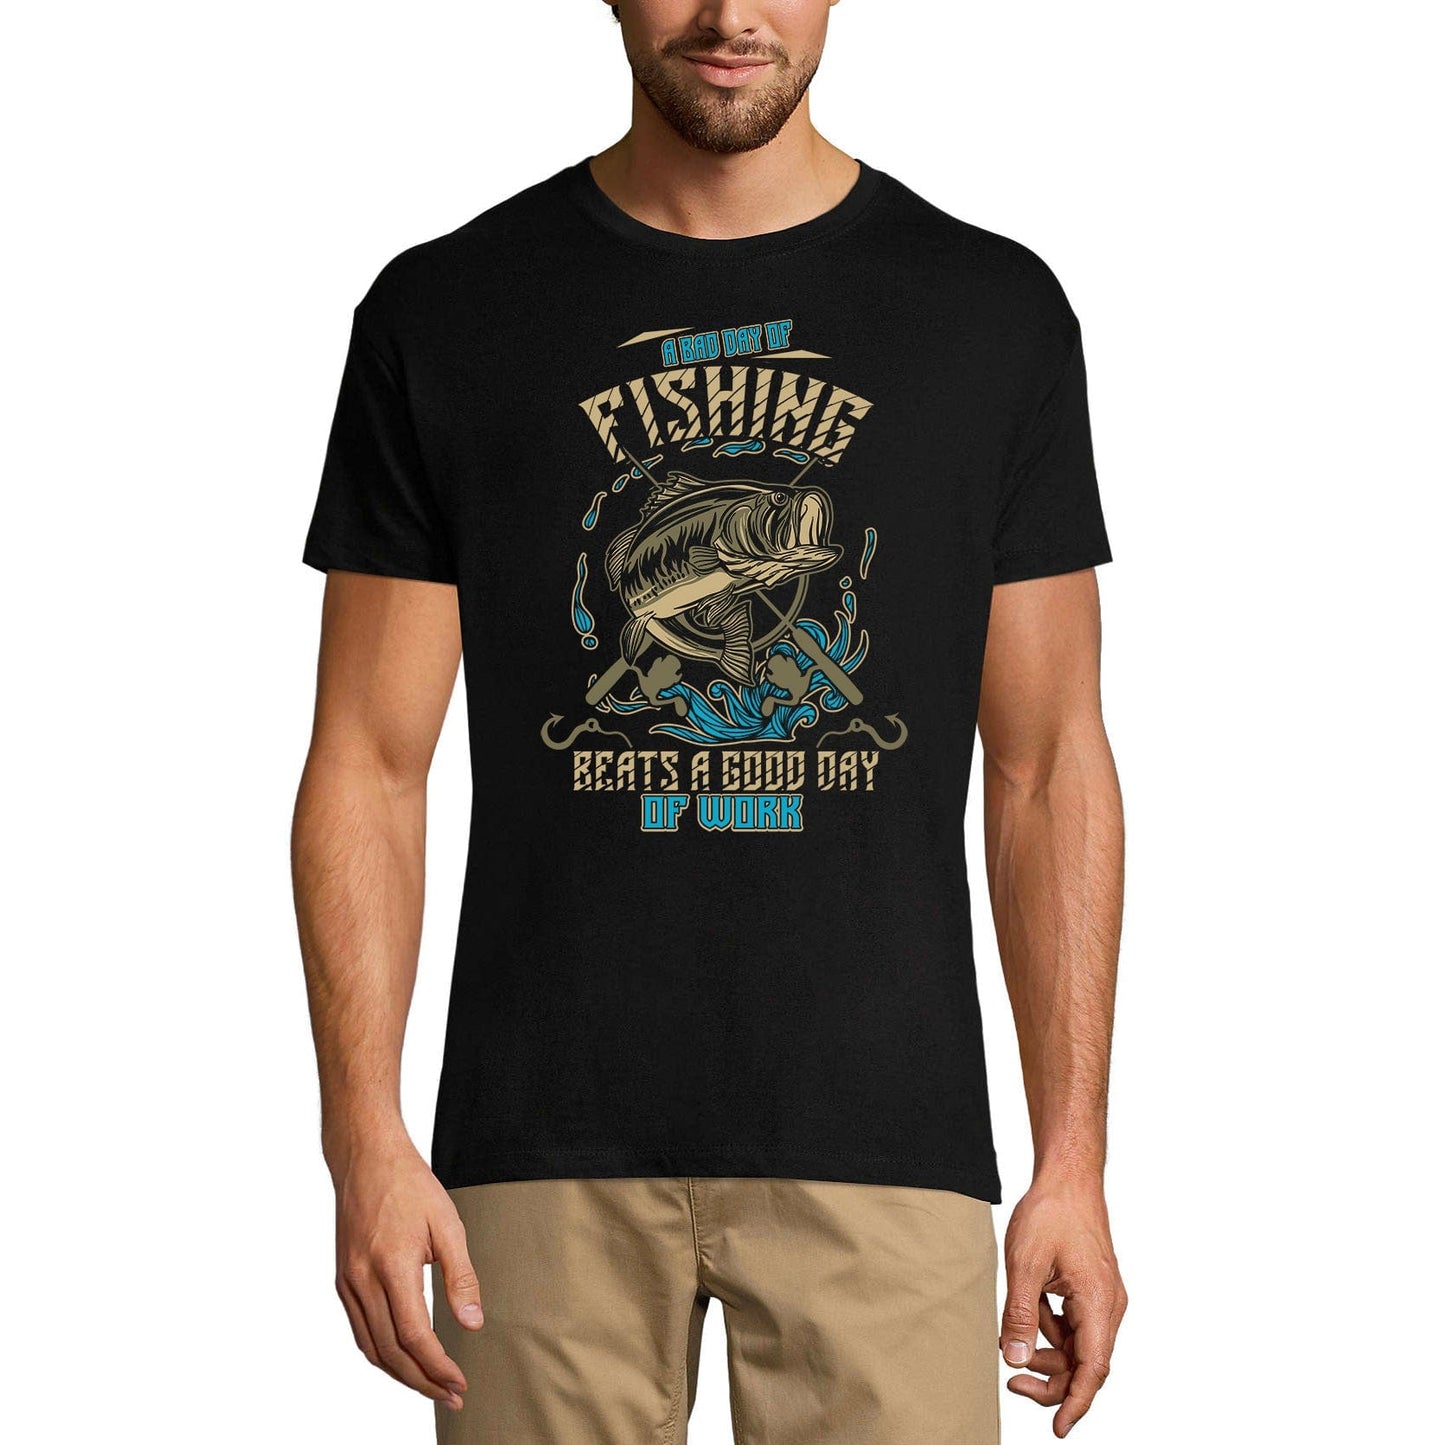 ULTRABASIC Men's T-Shirt Bad Day of Fishing Beats a Good Day of Work - Funny Fisherman Tee Shirt